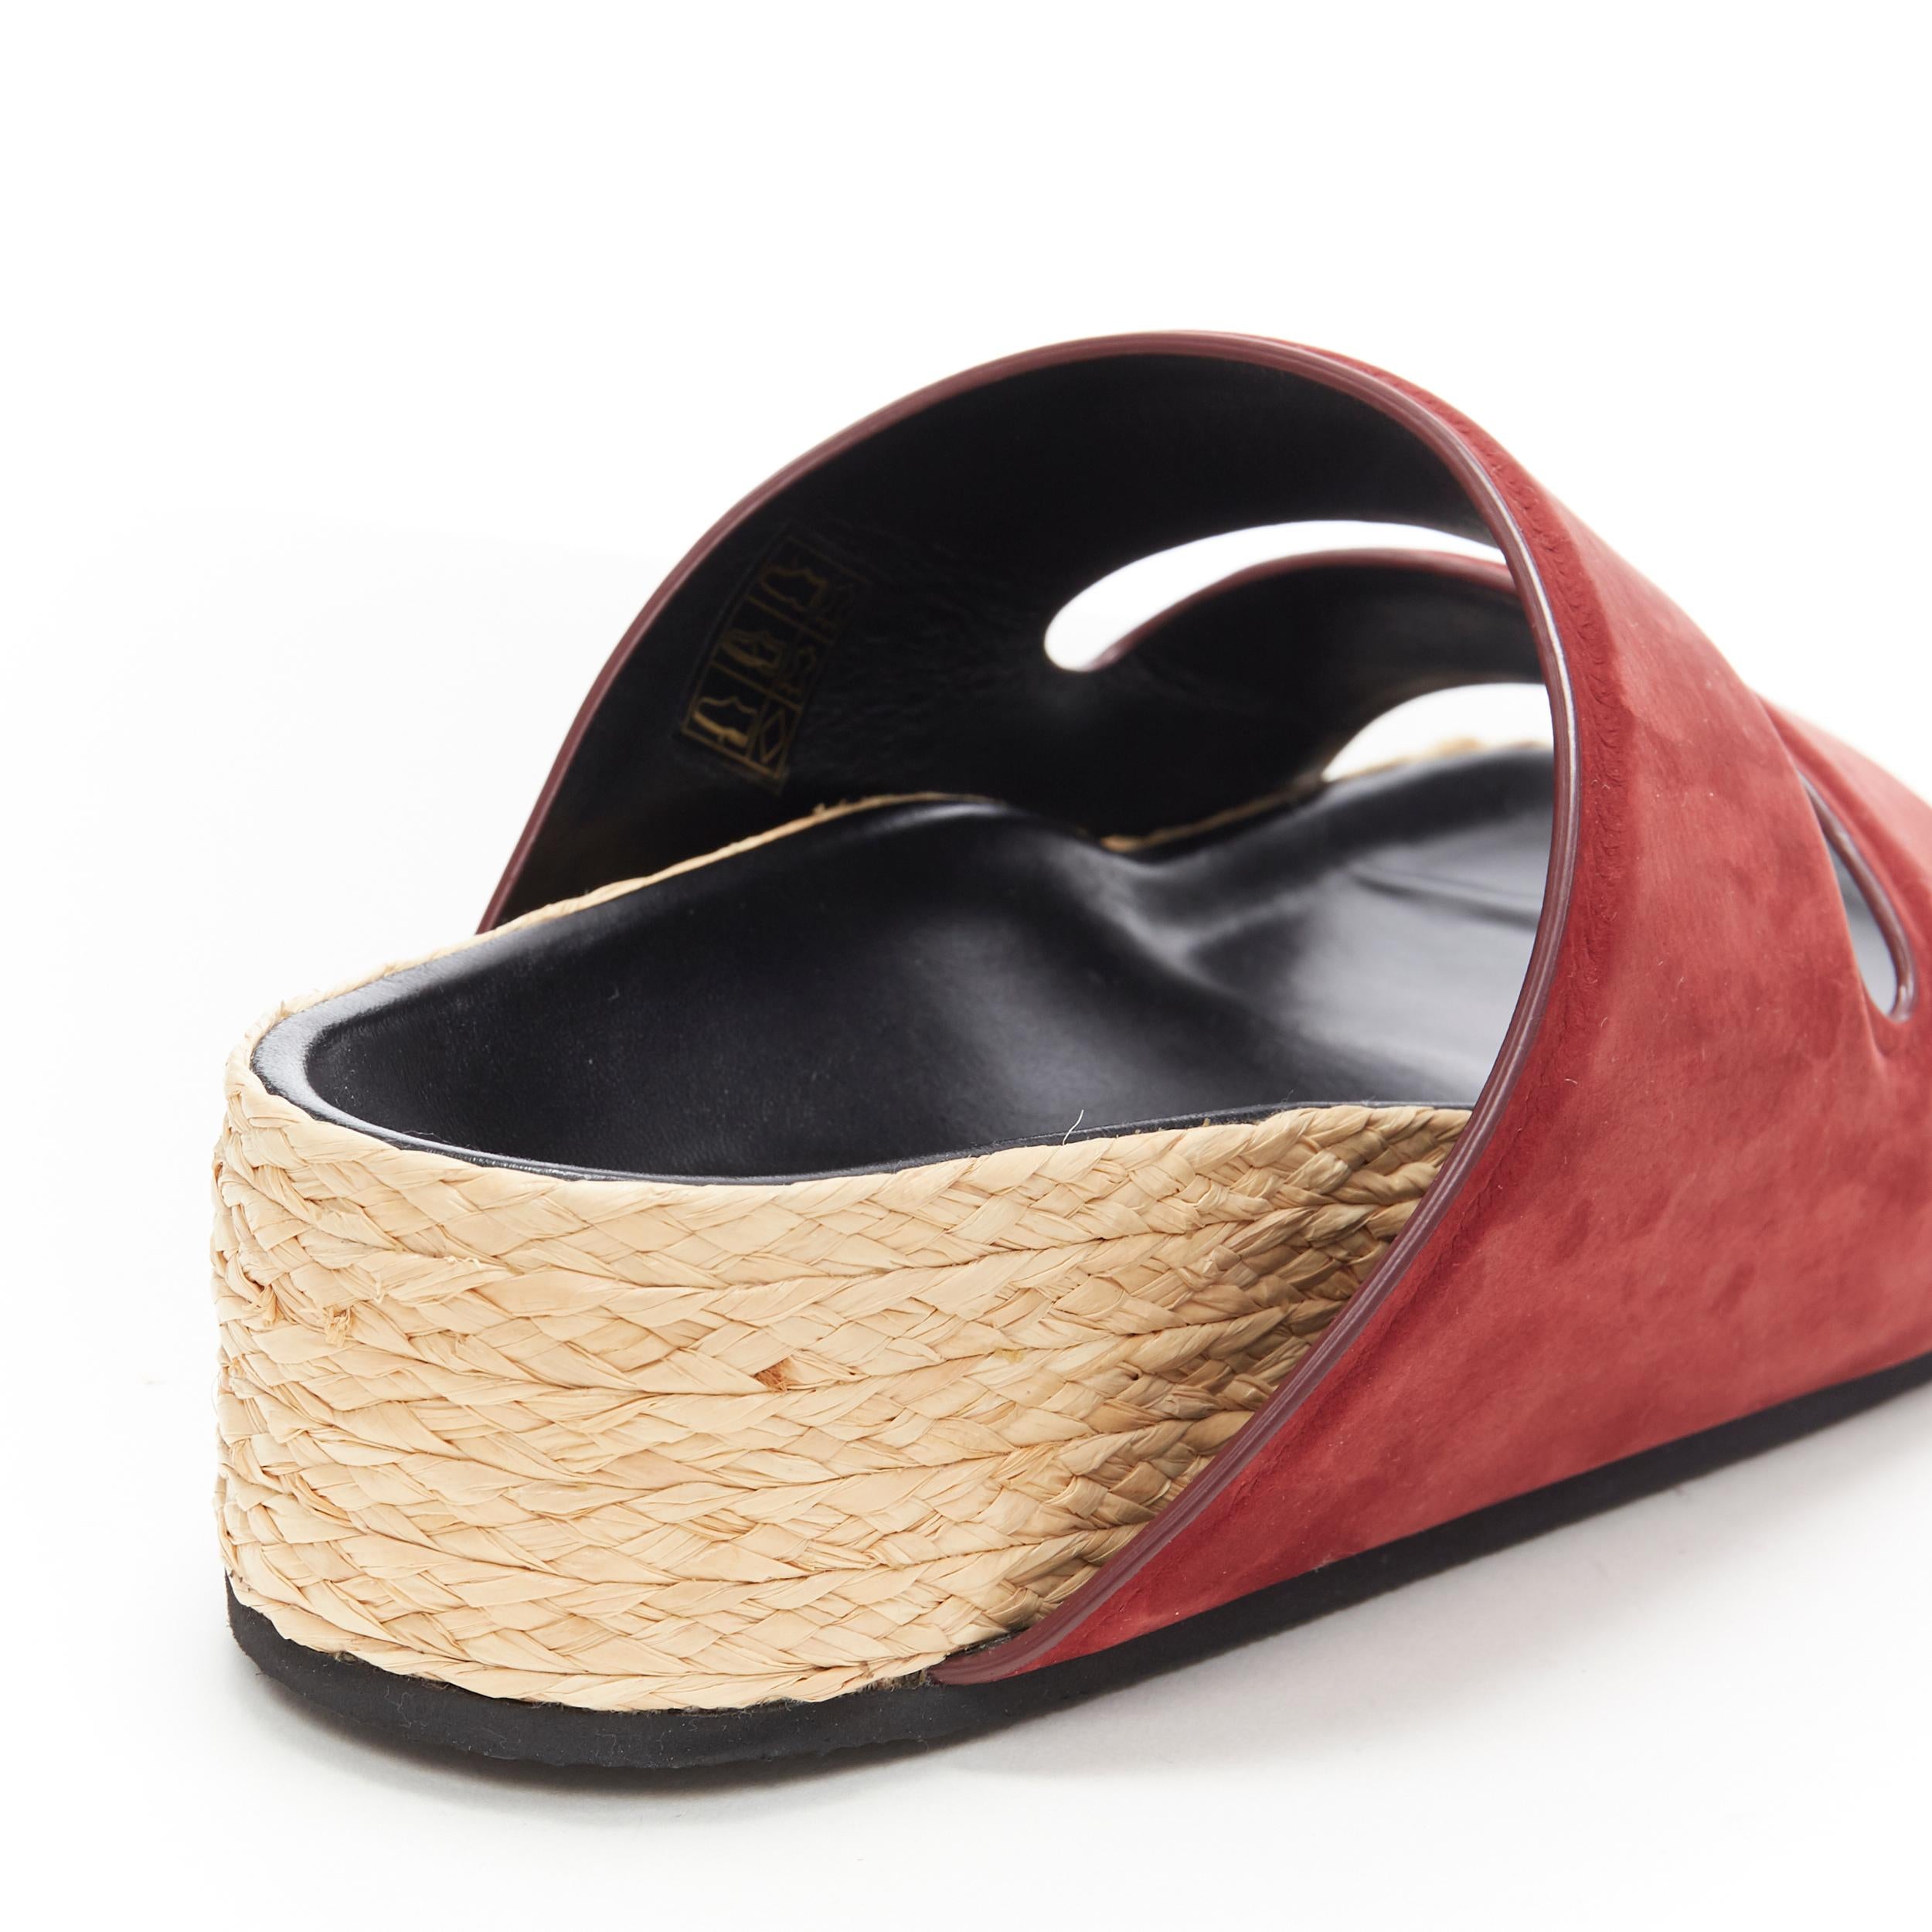 new CELINE PHOEBE PHILO burgundy red suede strap jute sole slides sandals EU38 1